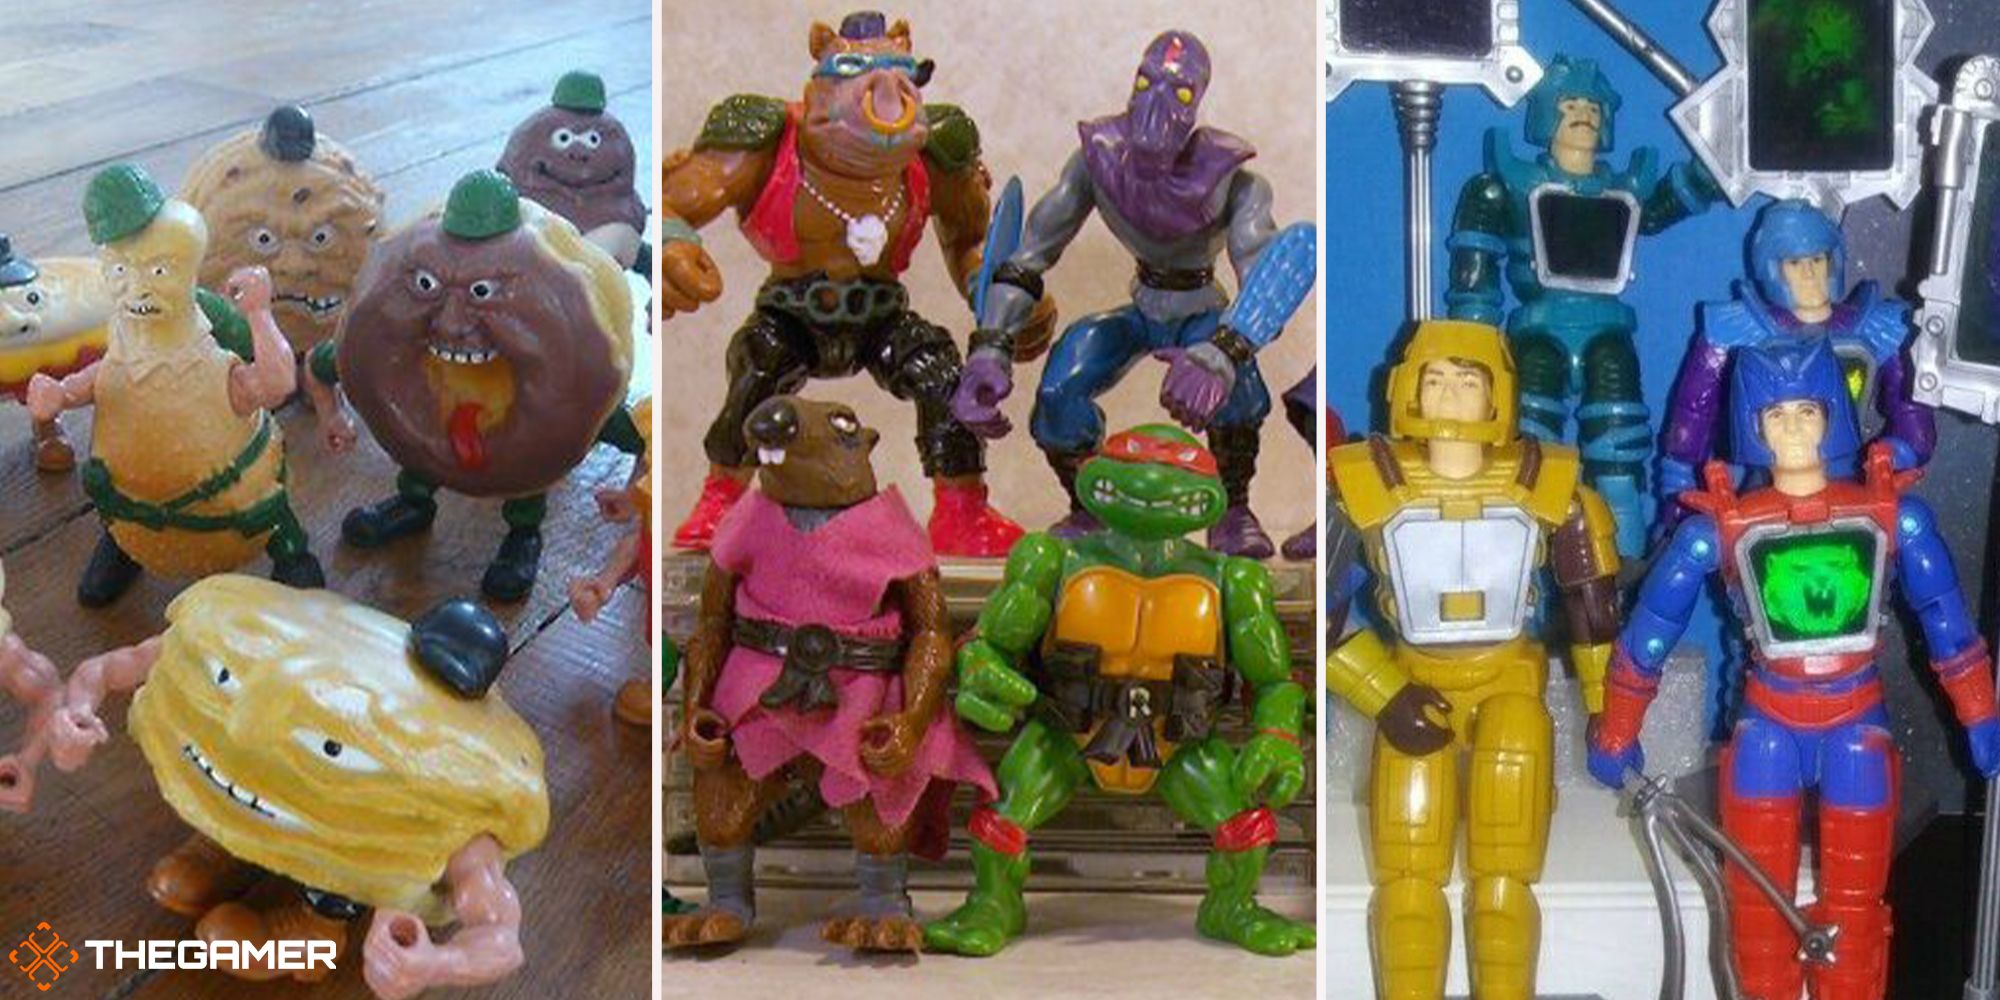 1980s toys